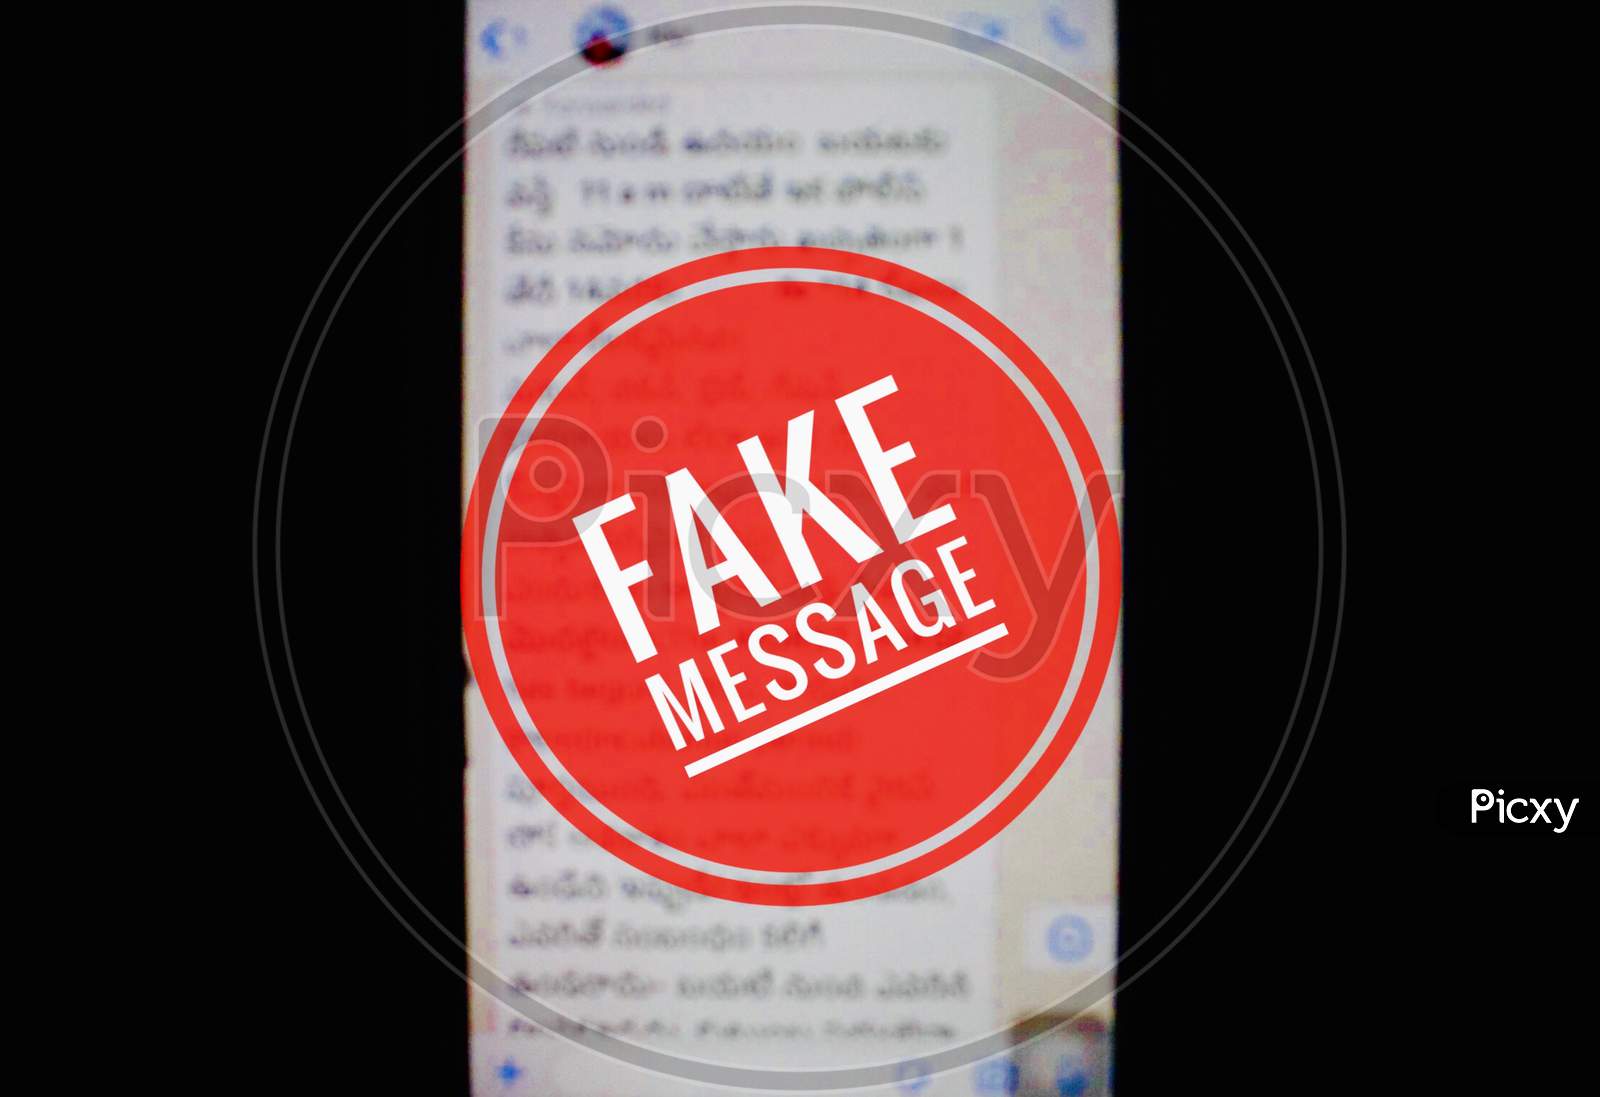 Fake news circulating over social media like WhatsApp Regarding covid19 corona virus